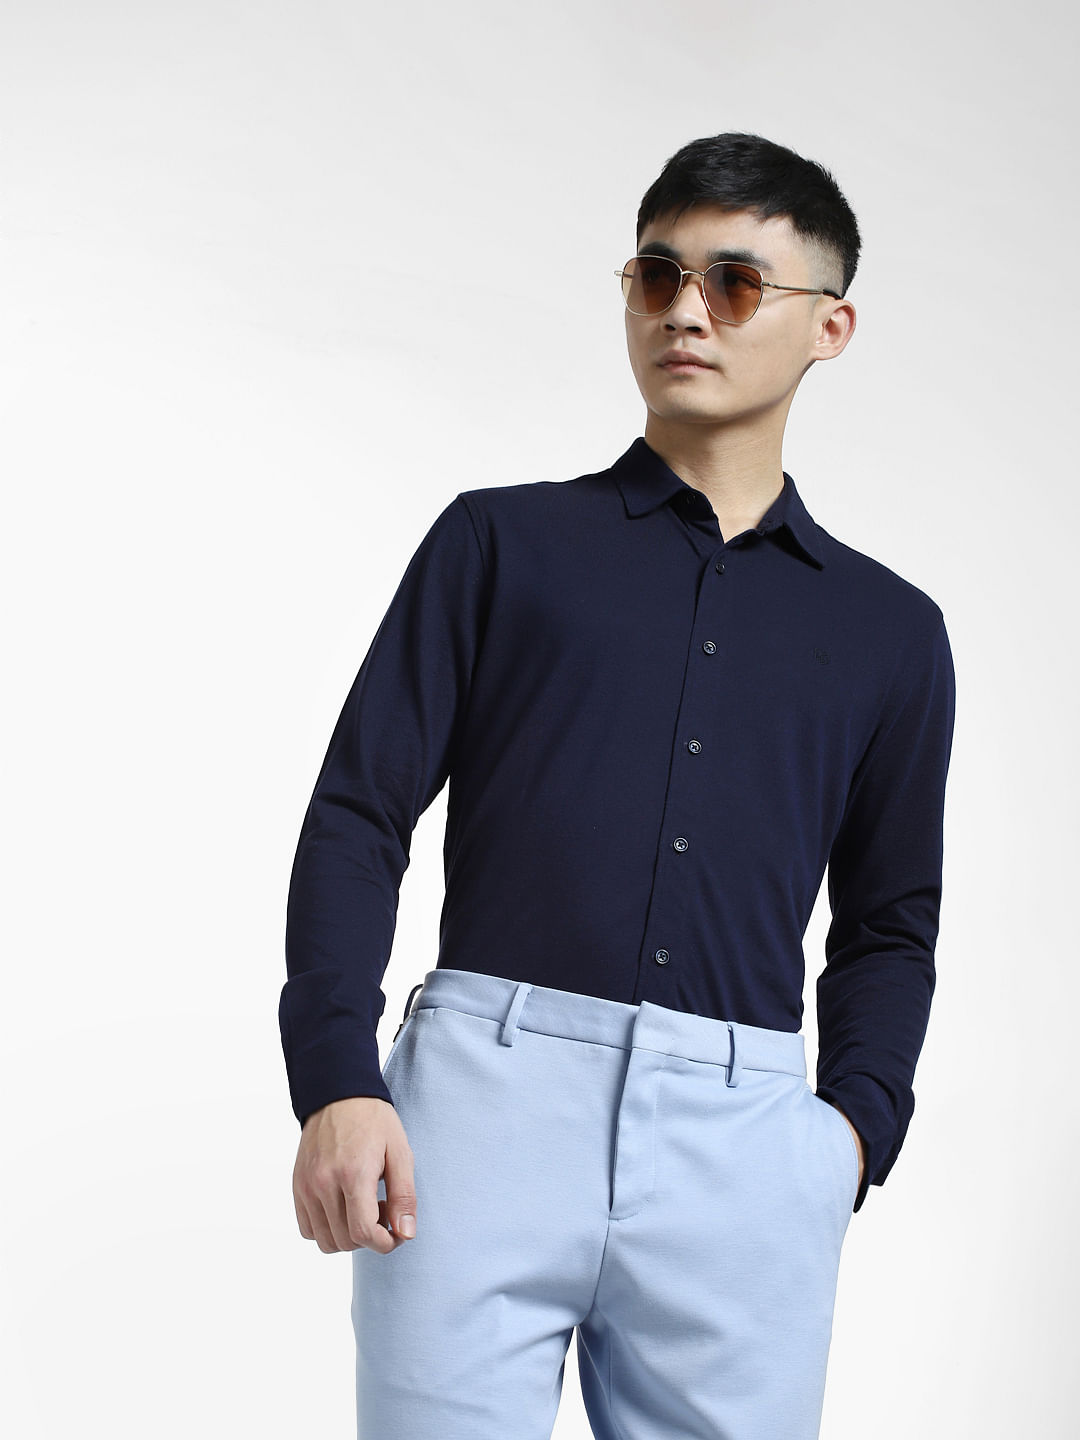 Buy Navy Blue Shirts for Men by AJIO Online  Ajiocom